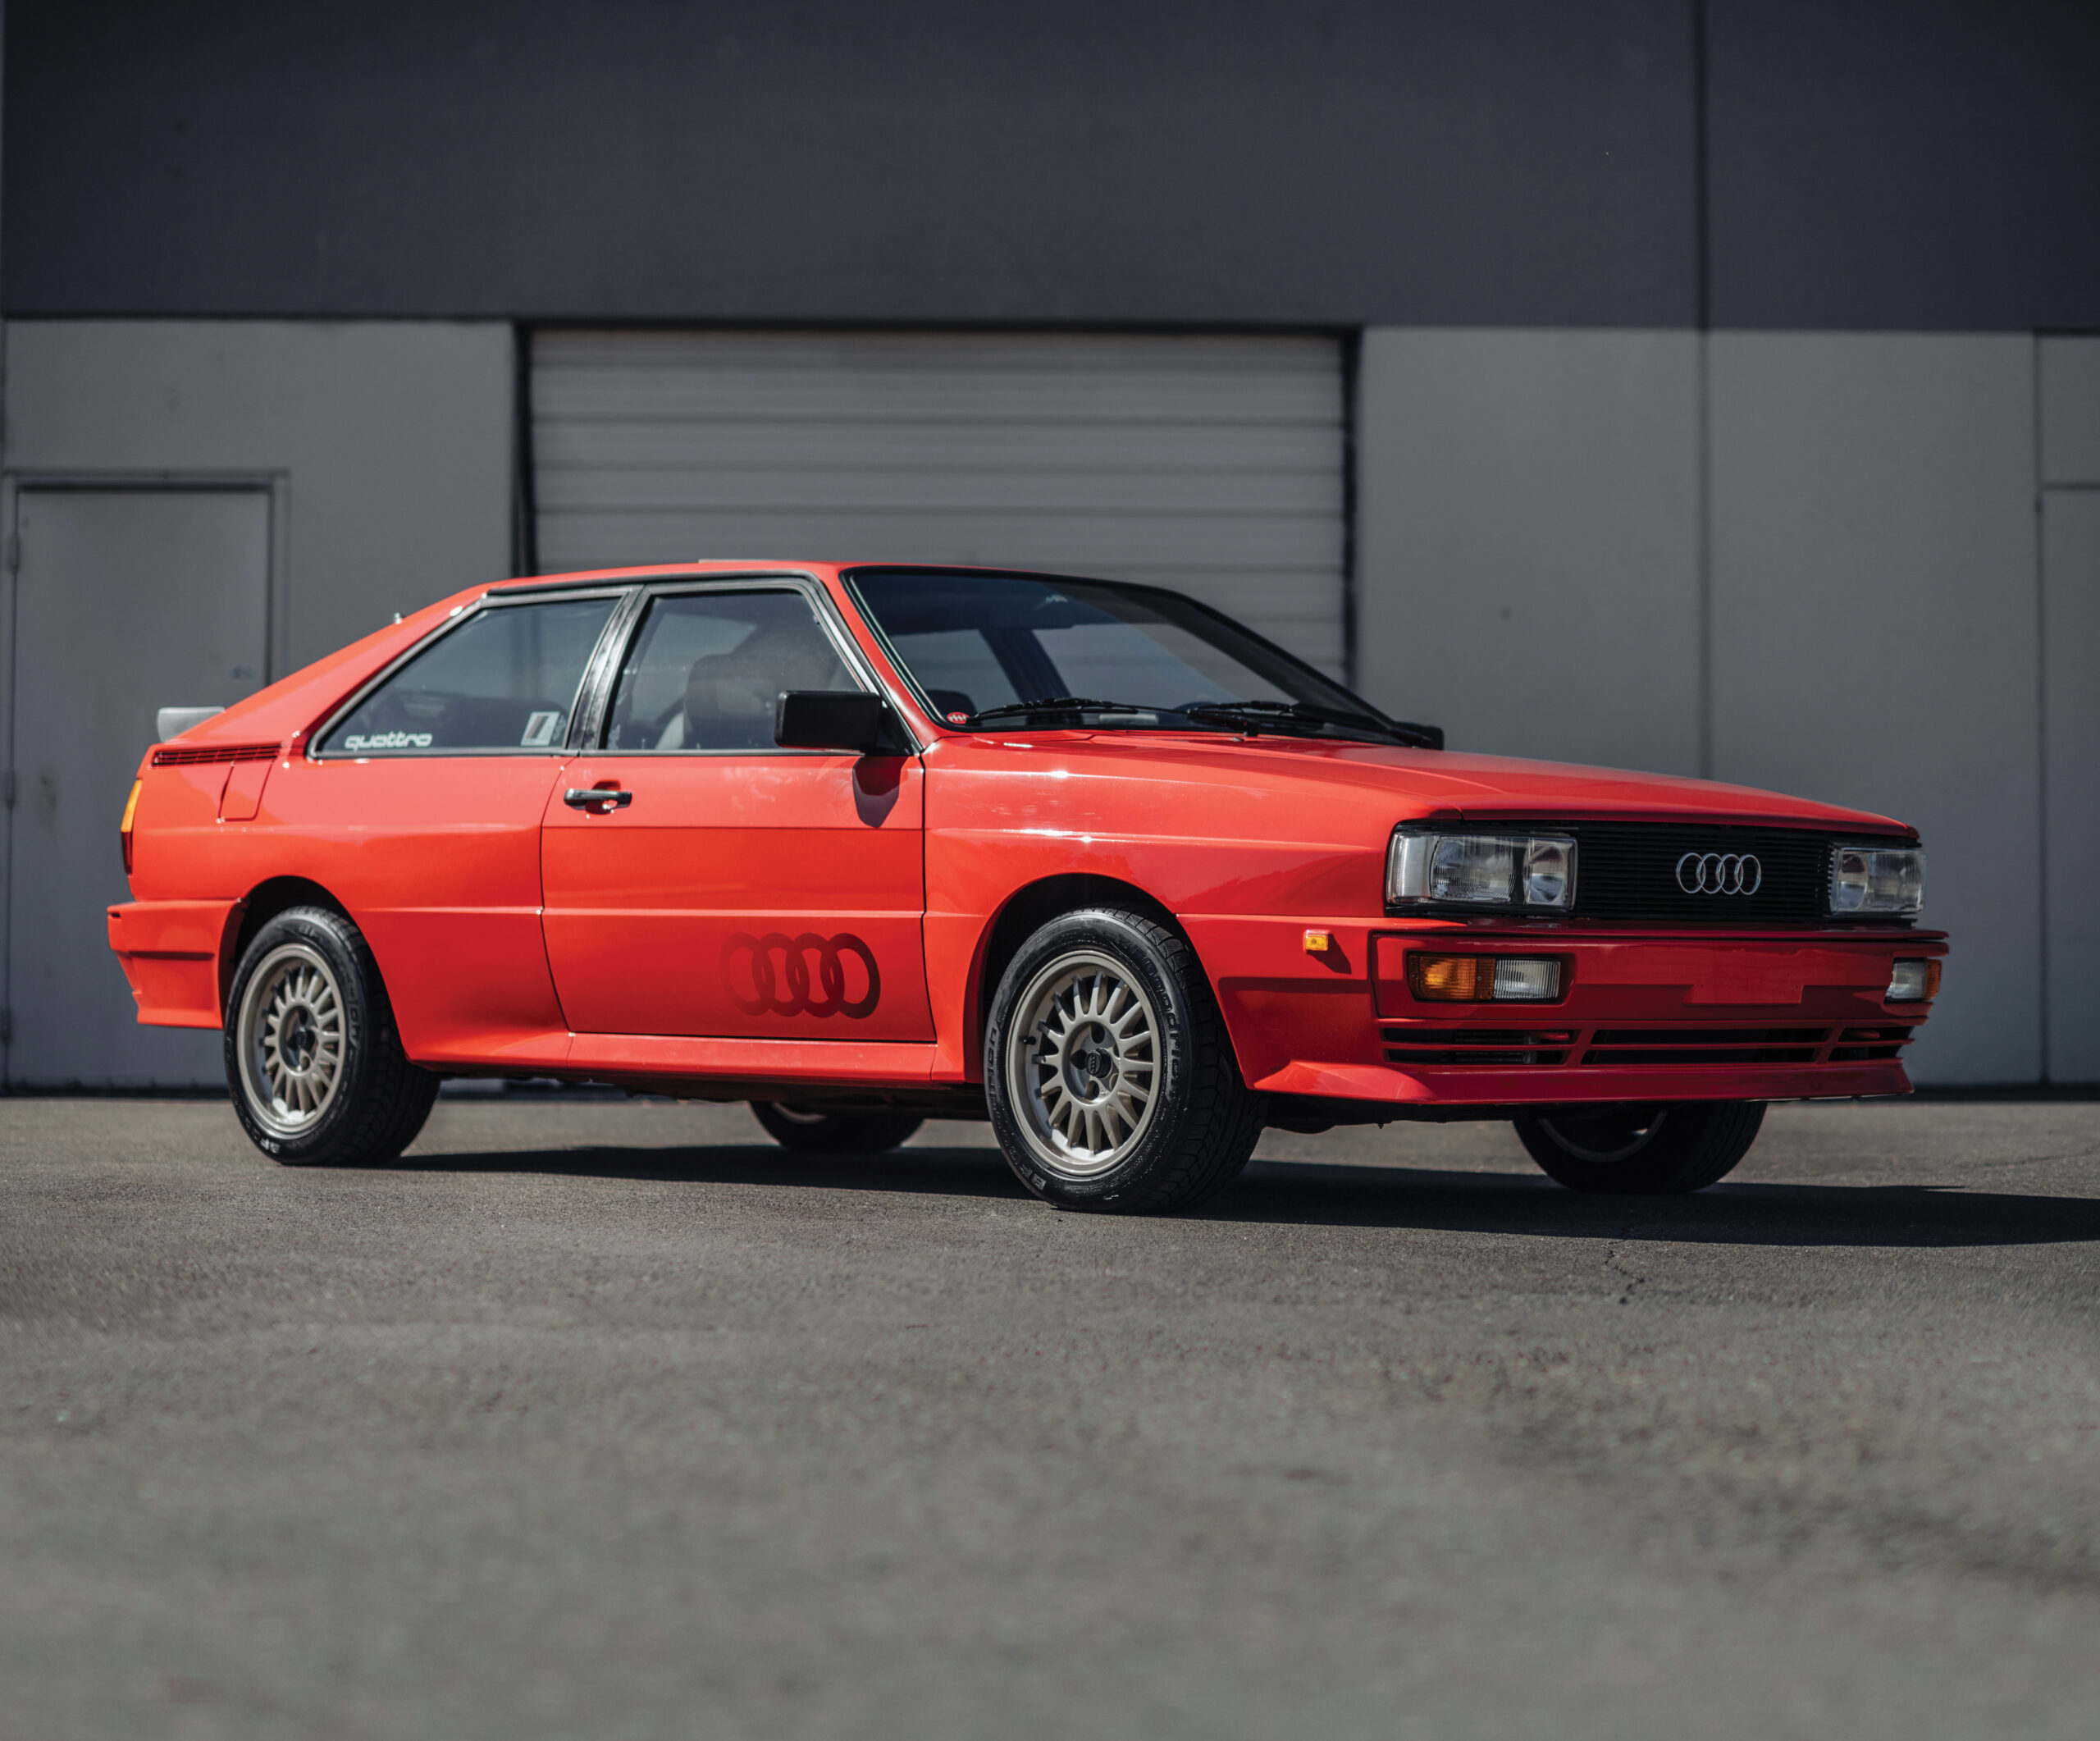 The Audi Ur-Quattro Is A Rare And Revolutionary Classic